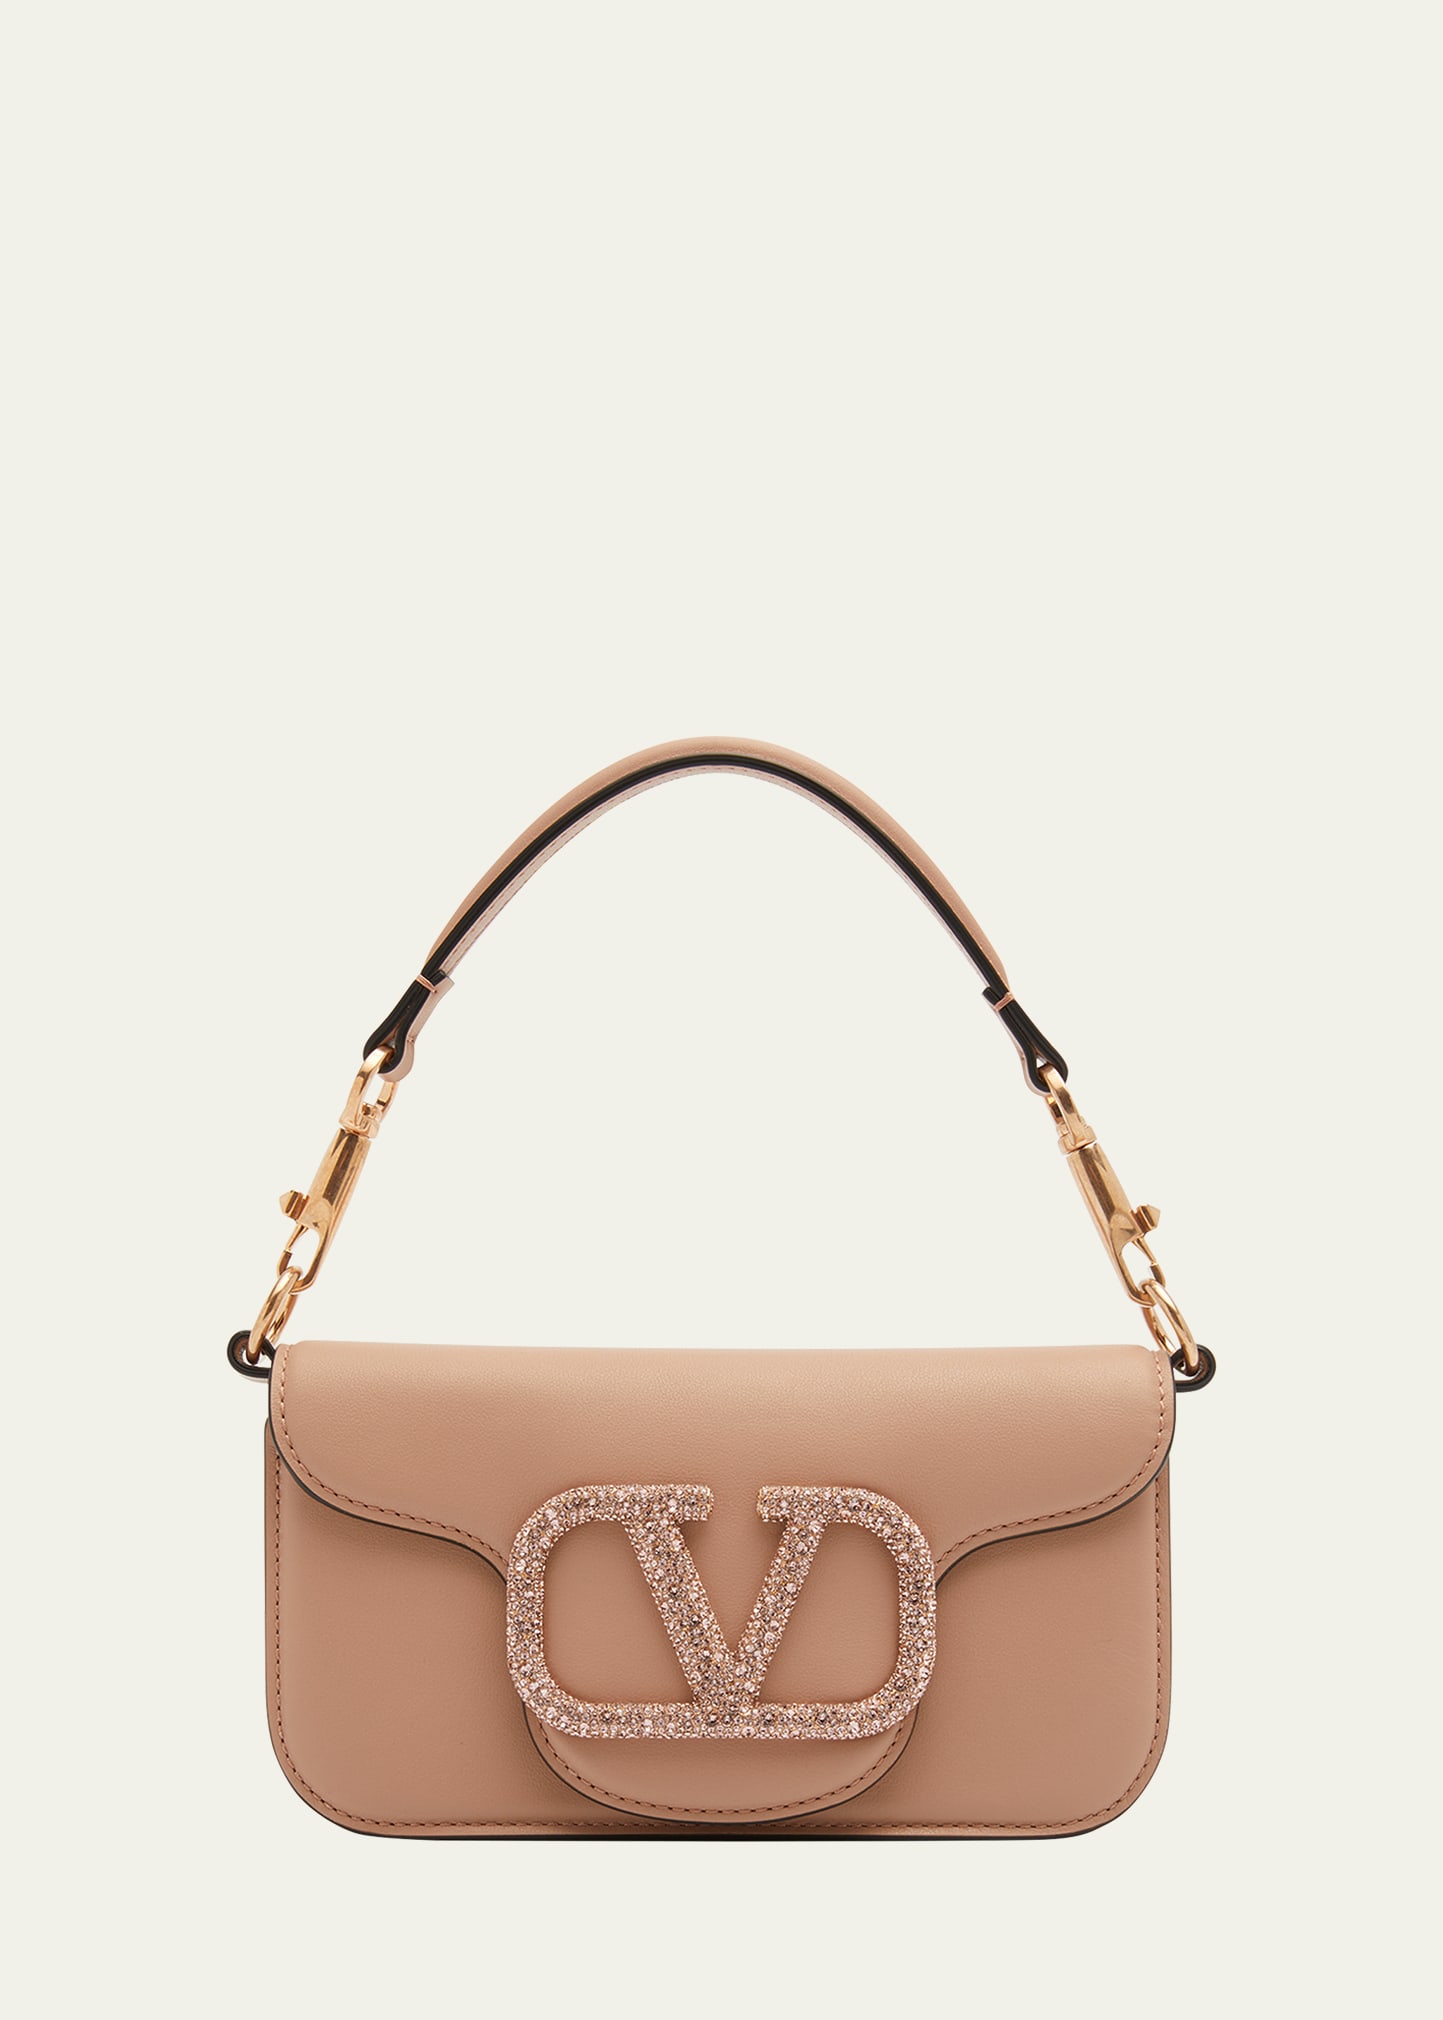 Valentino Garavani Loco VLOGO Leather Shoulder Bag  Valentino garavani  bag, Bags, Black designer bags